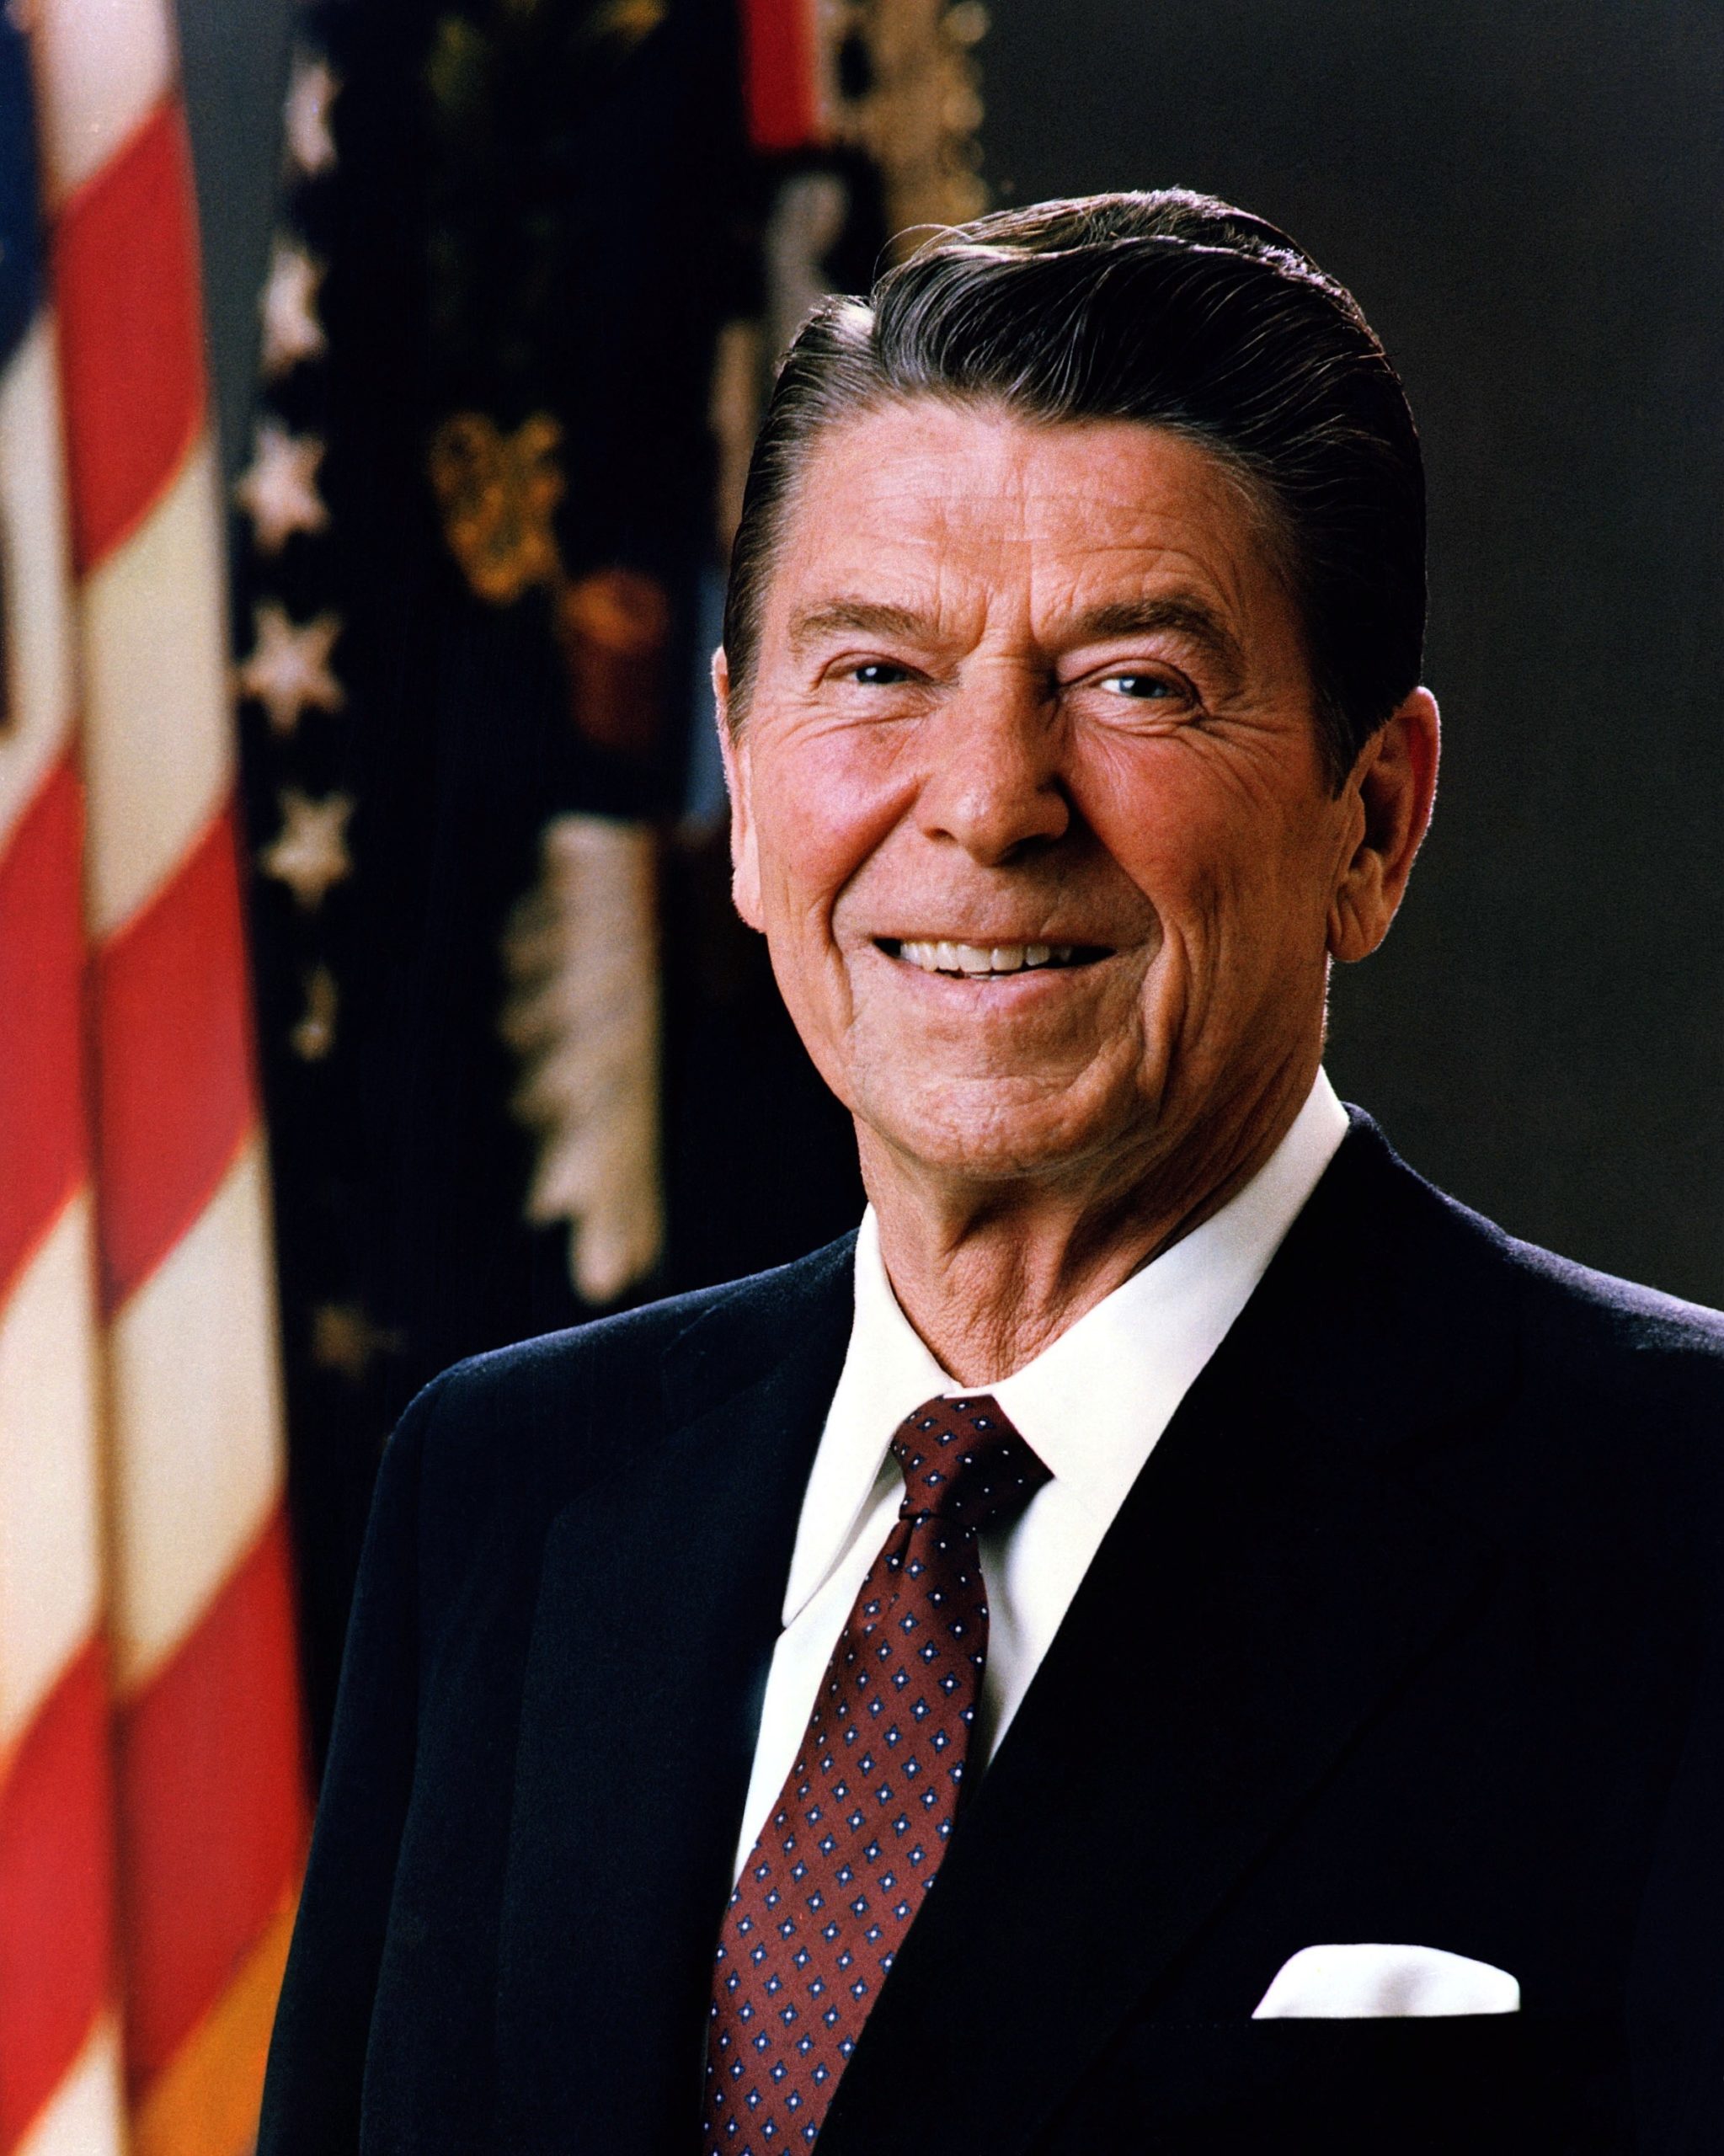 Ronald Reagan, 1911-2004